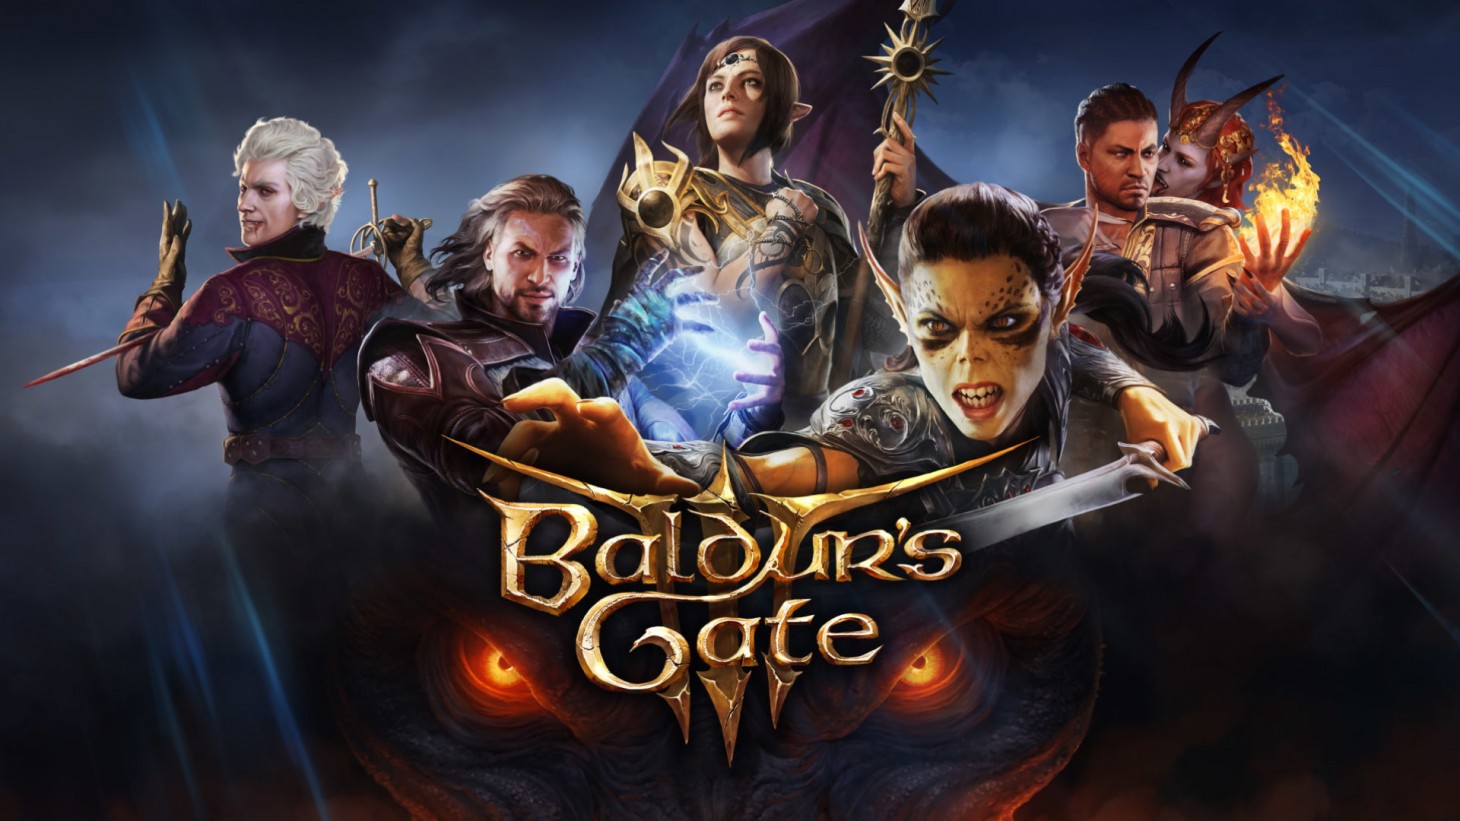 Baldur's Gate 3 release date and details